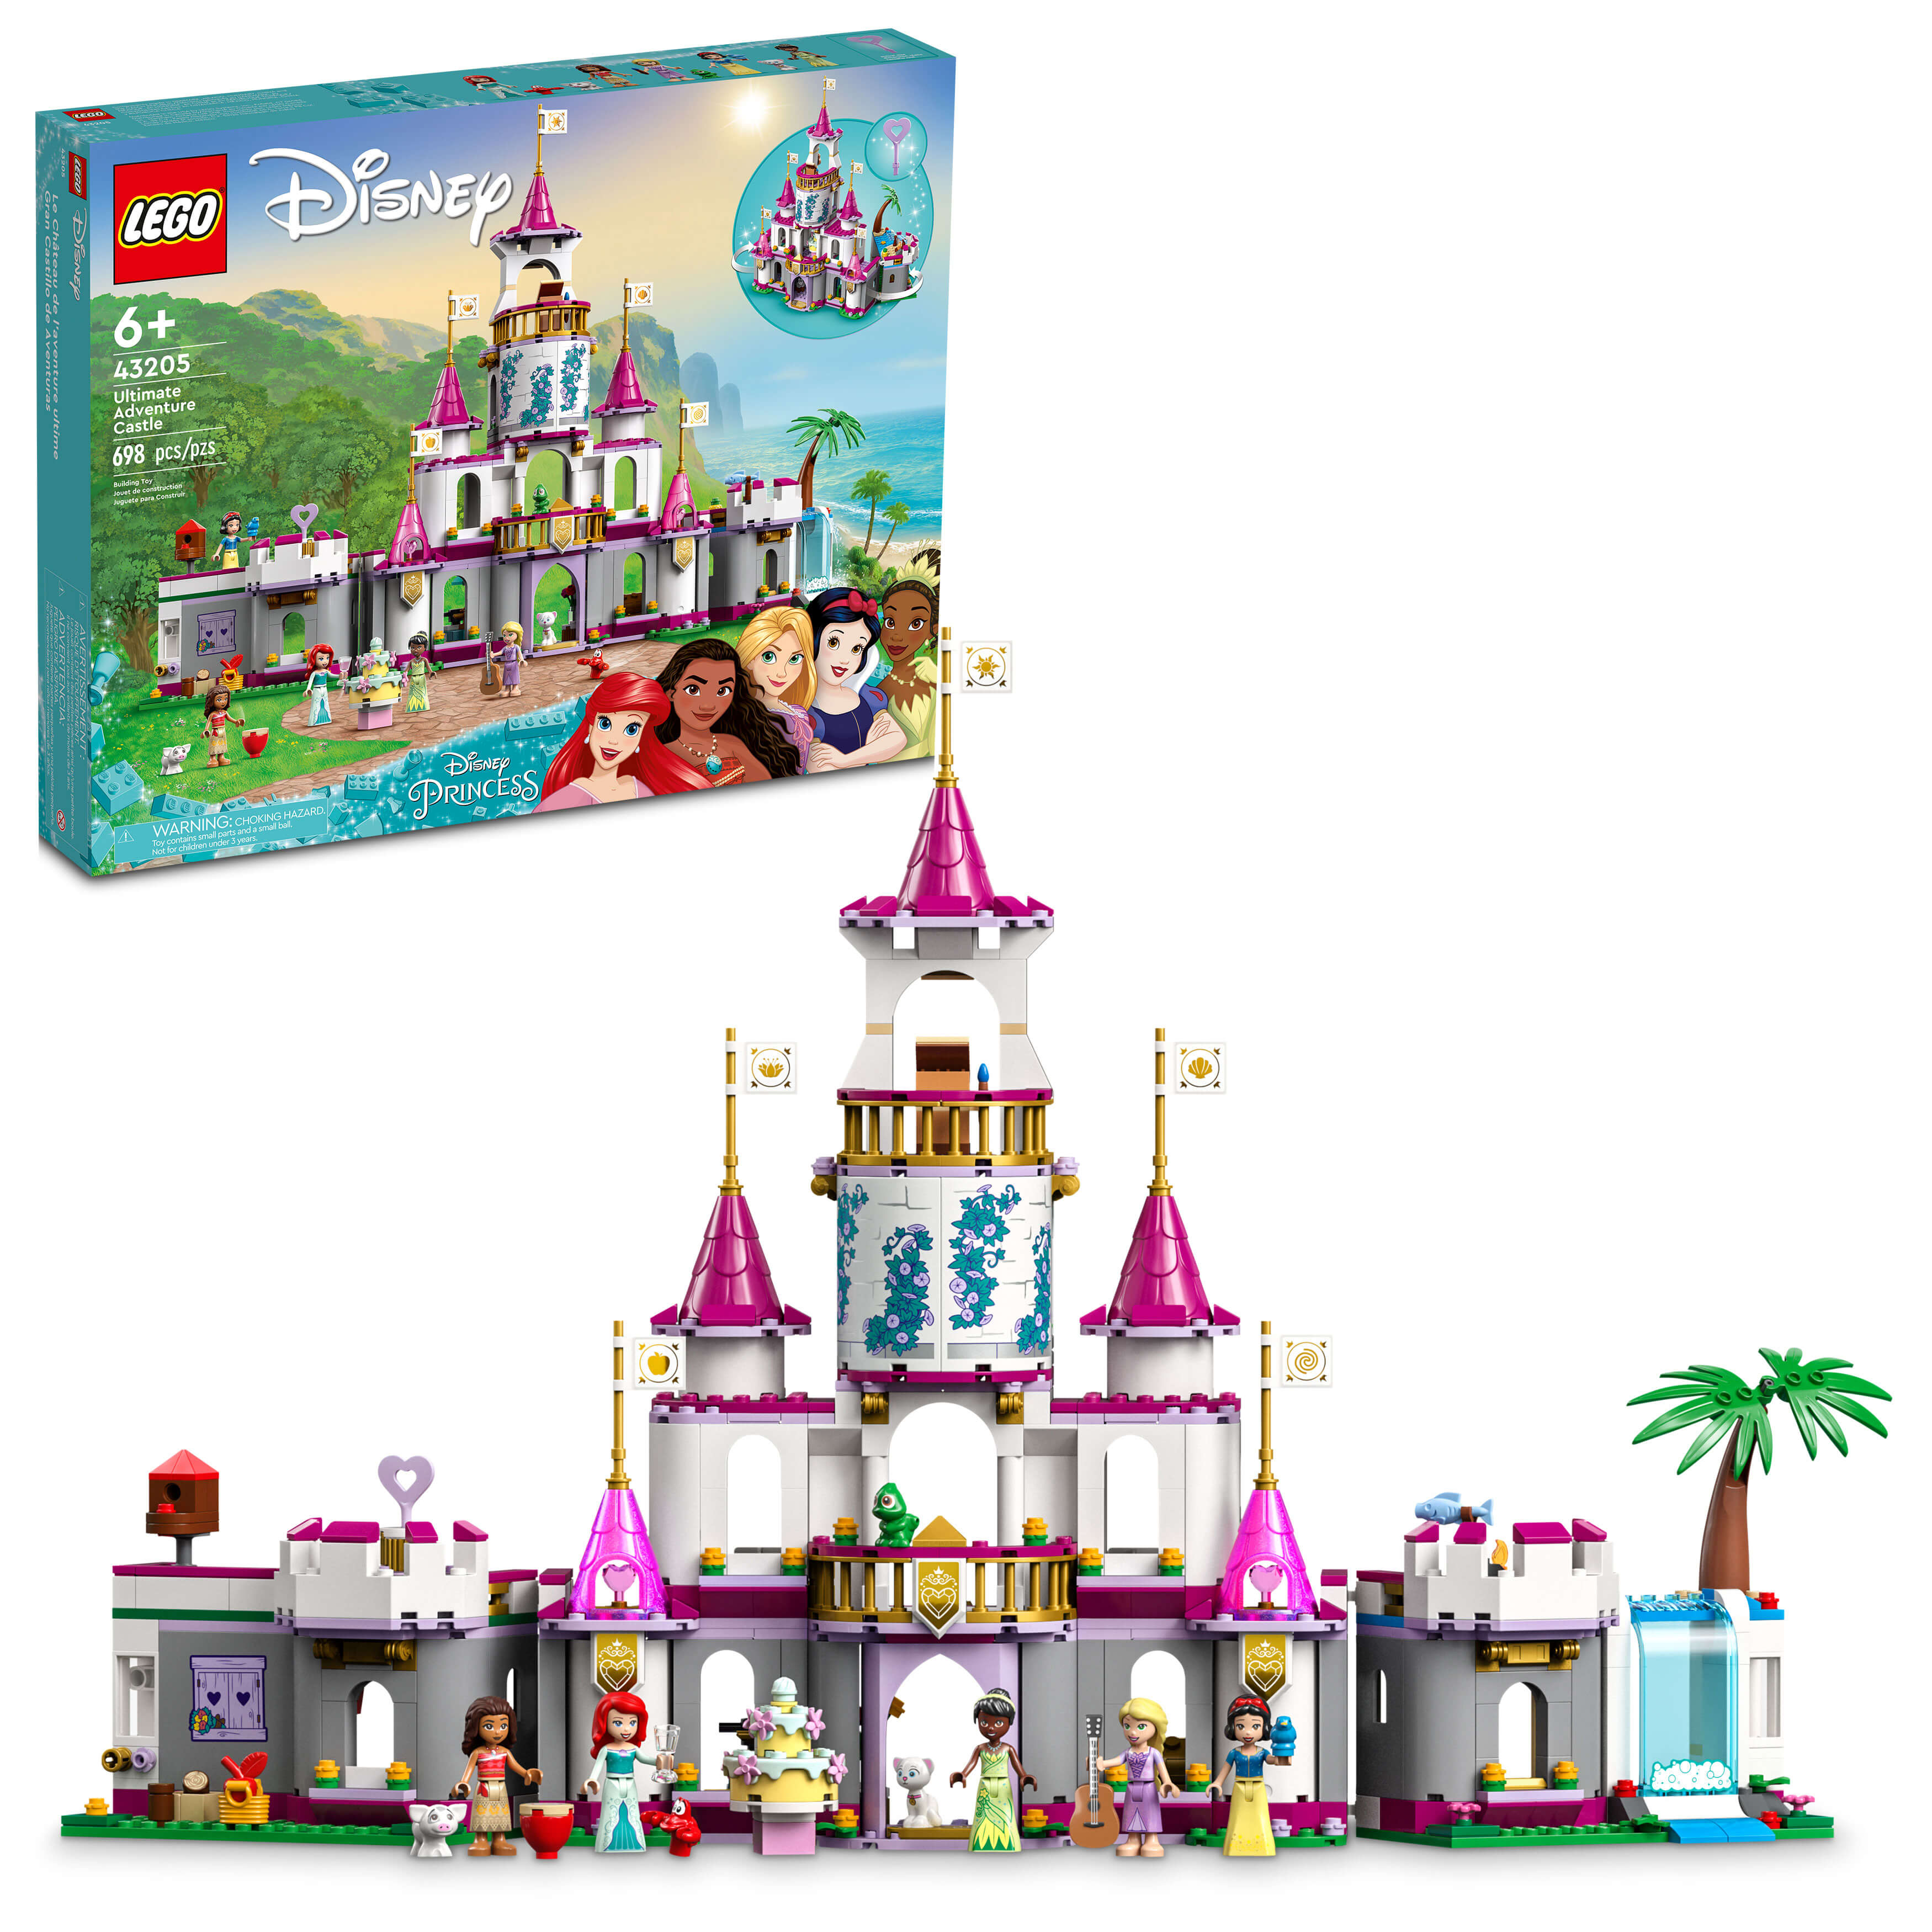 LEGO® Disney Princess Ultimate Adventure Castle 43205 Building Kit (698 Pieces)